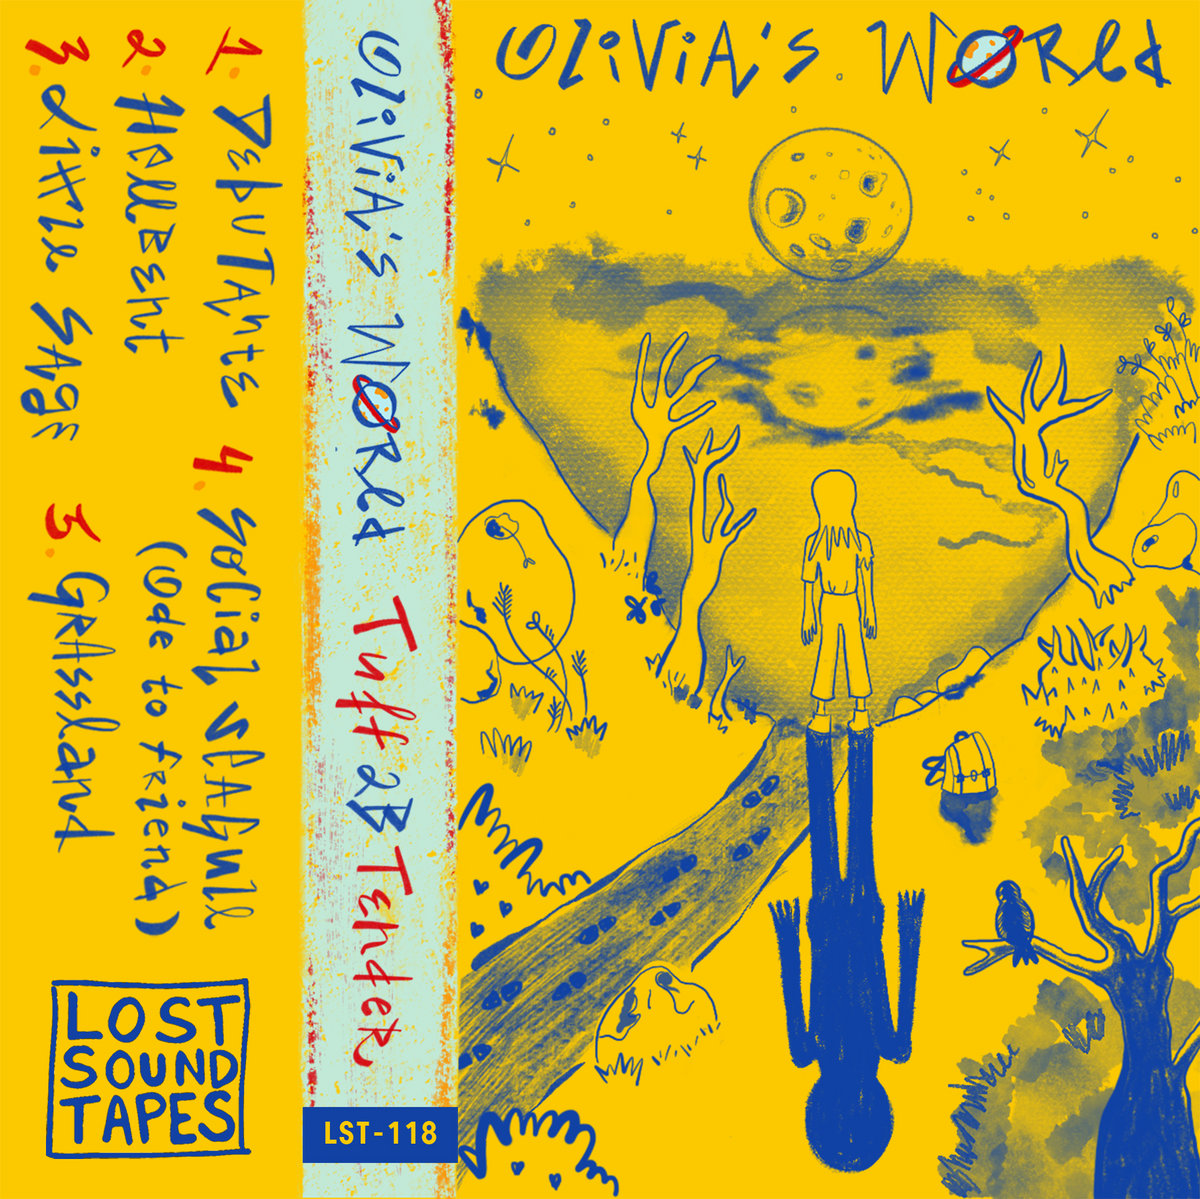 Olivia's World tuff 2b tender - blue drawings on yellow background